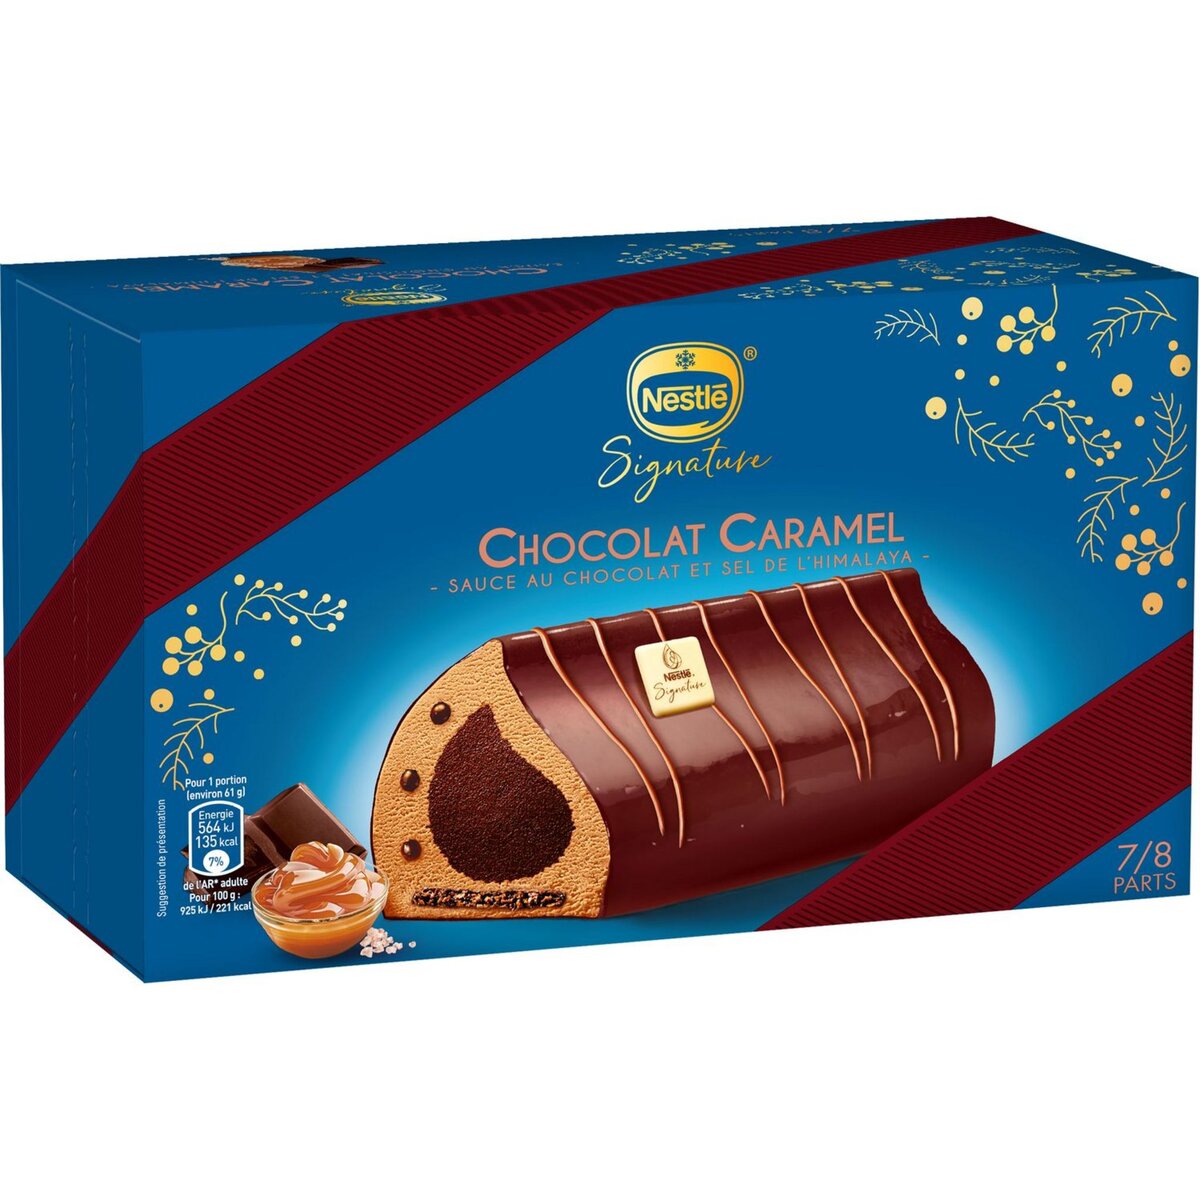 NESTLE Nestlé Signature Bûche glacée chocolat caramel 489g 7-8 parts 489g